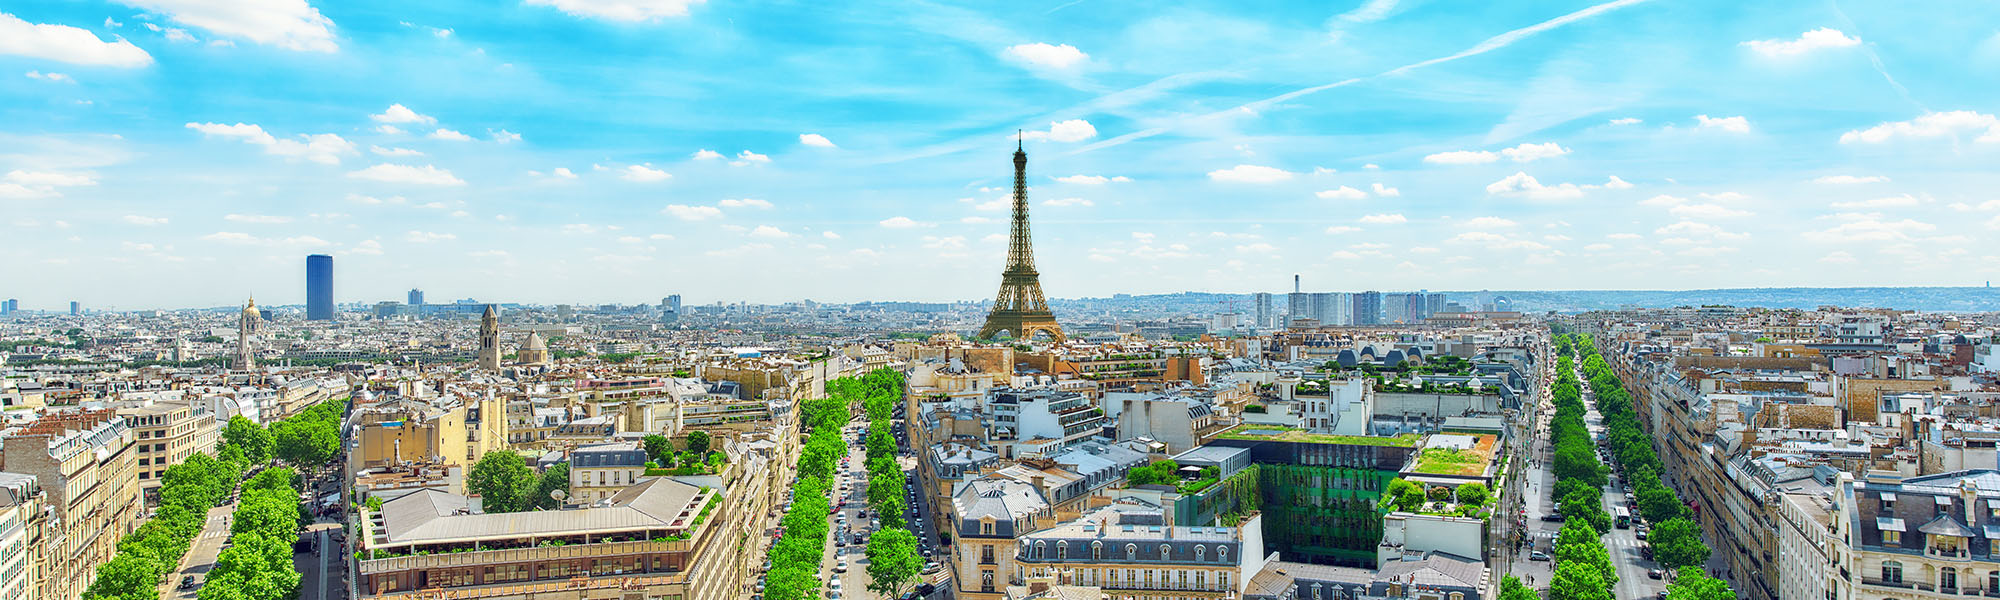 tourhub | Just Go Holidays | Paris & River Seine Cruise 